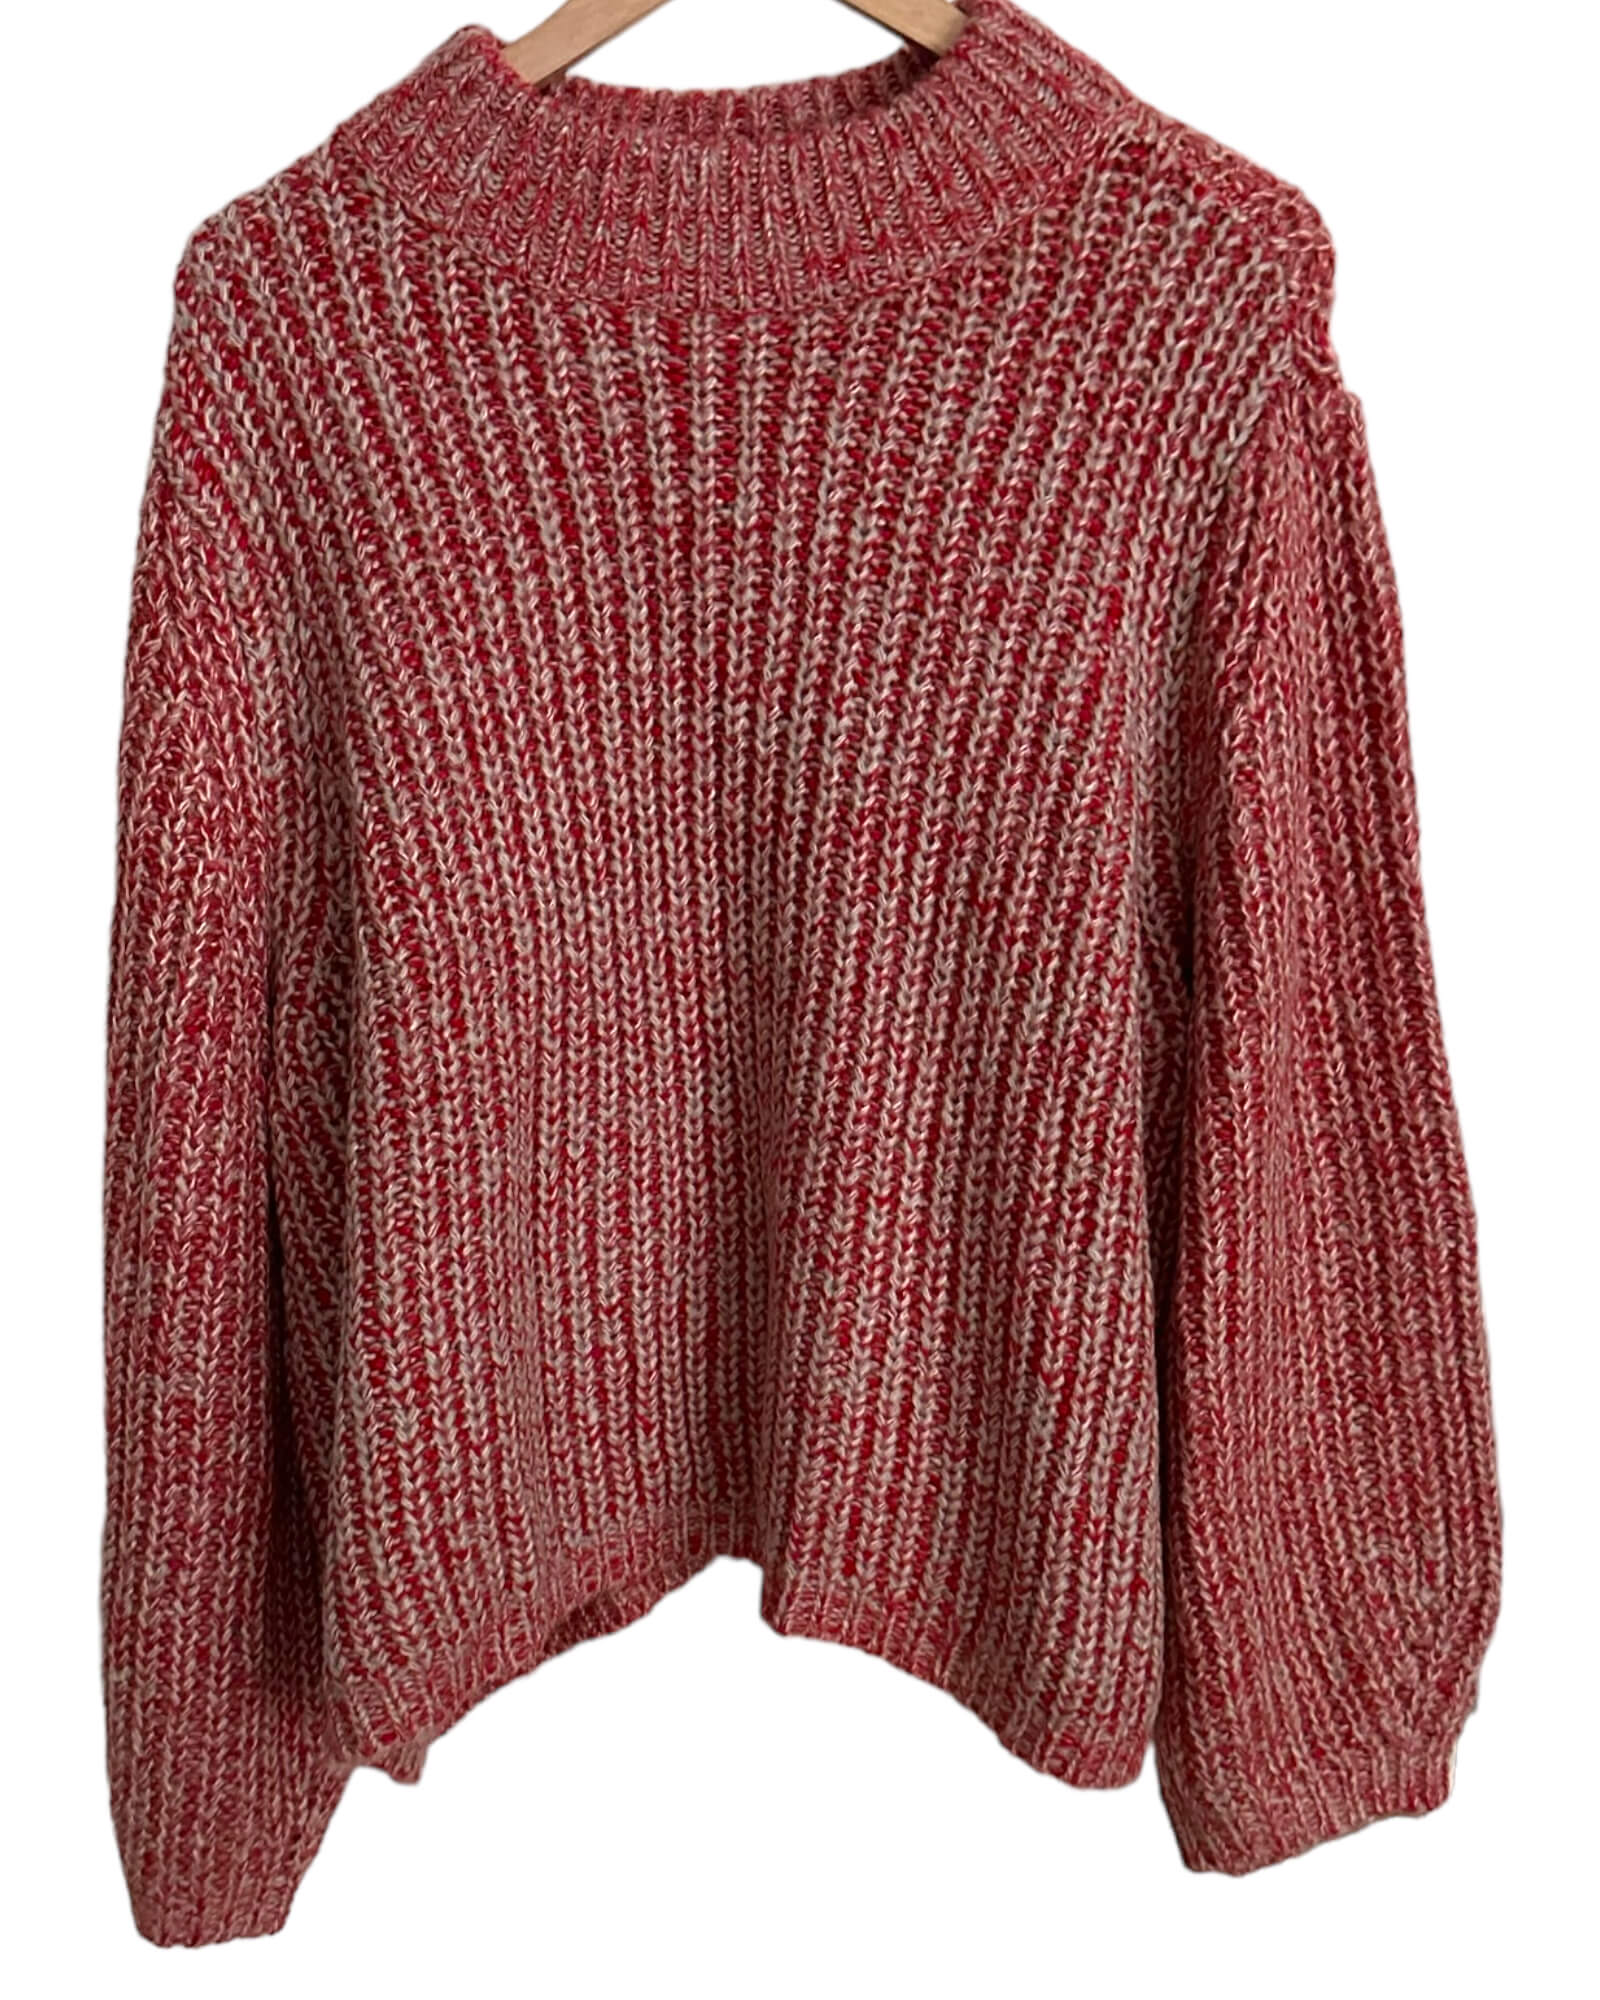 Warm Autumn Marle Stitch Sweater